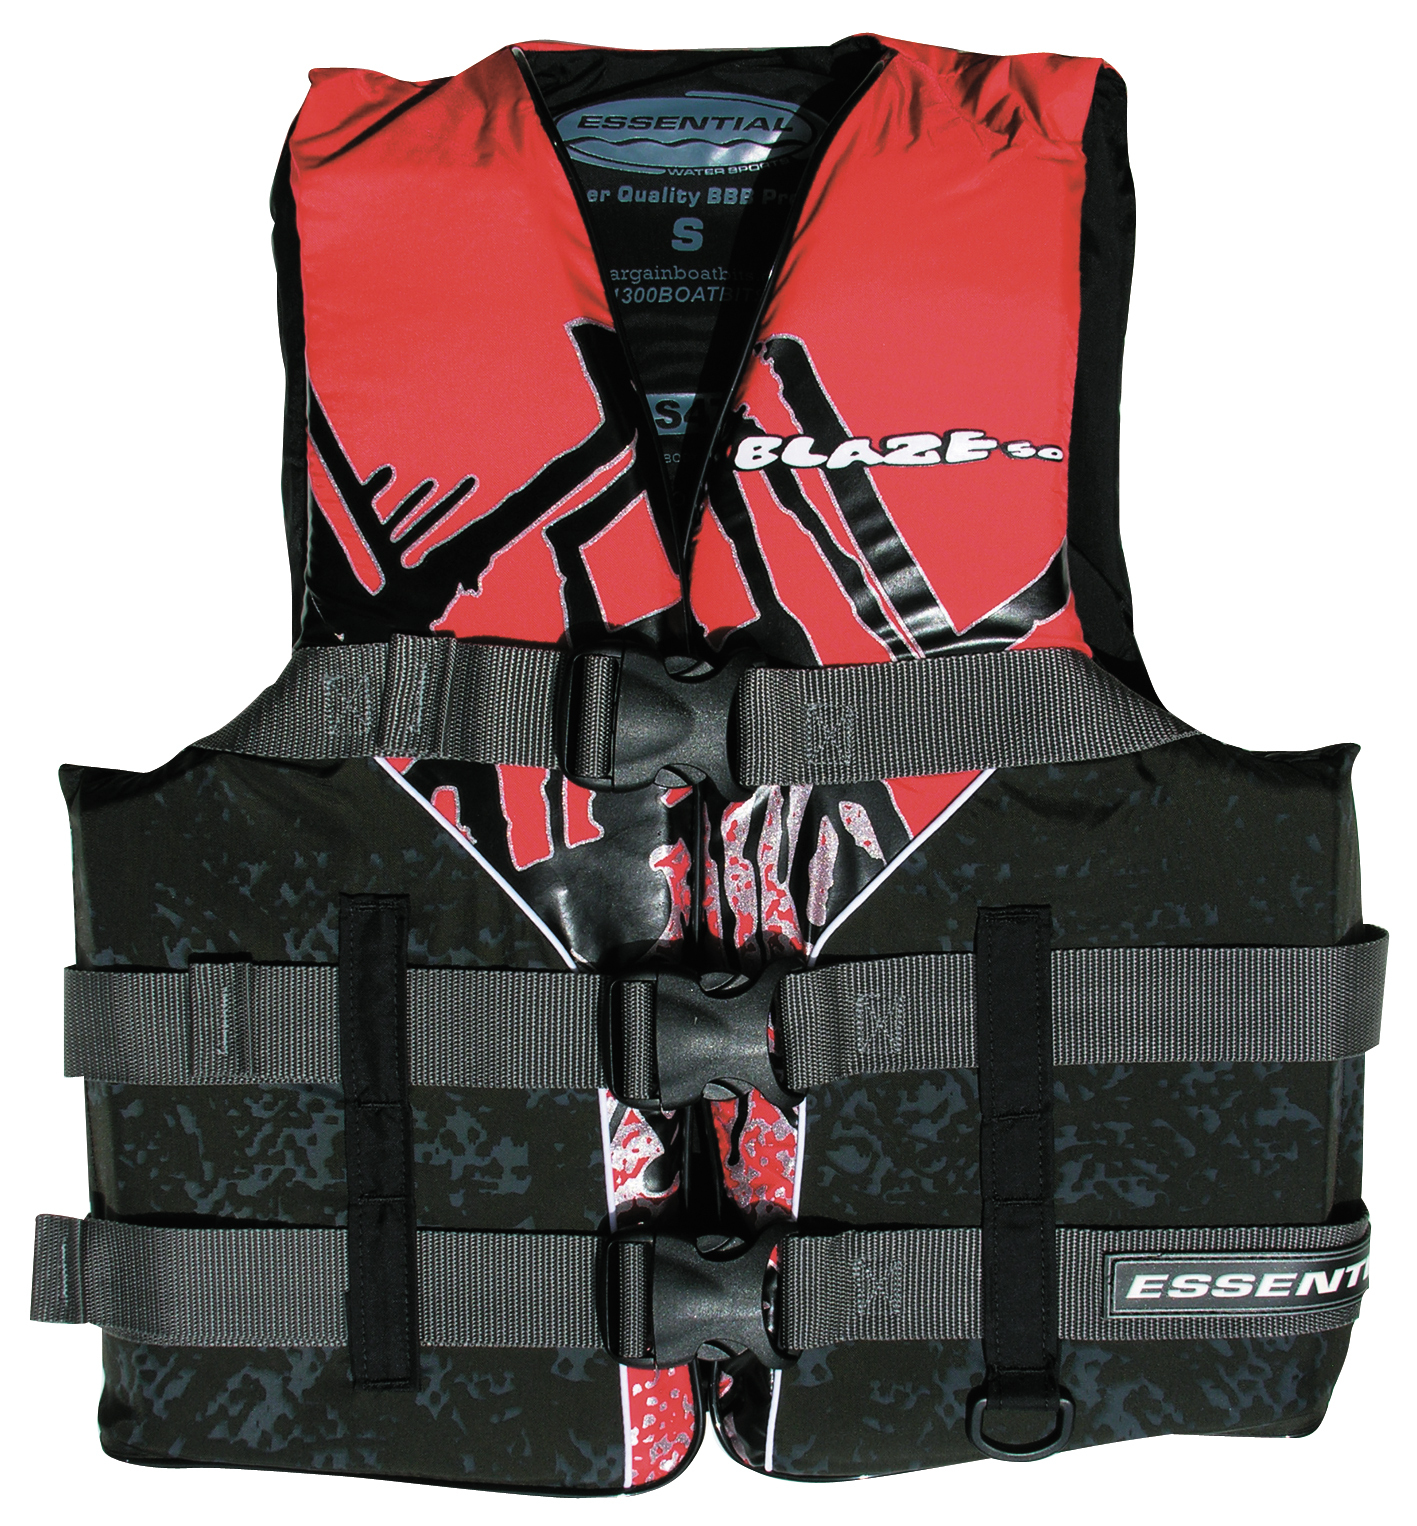 Essential Blaze L50 Adult Ski Vest Red